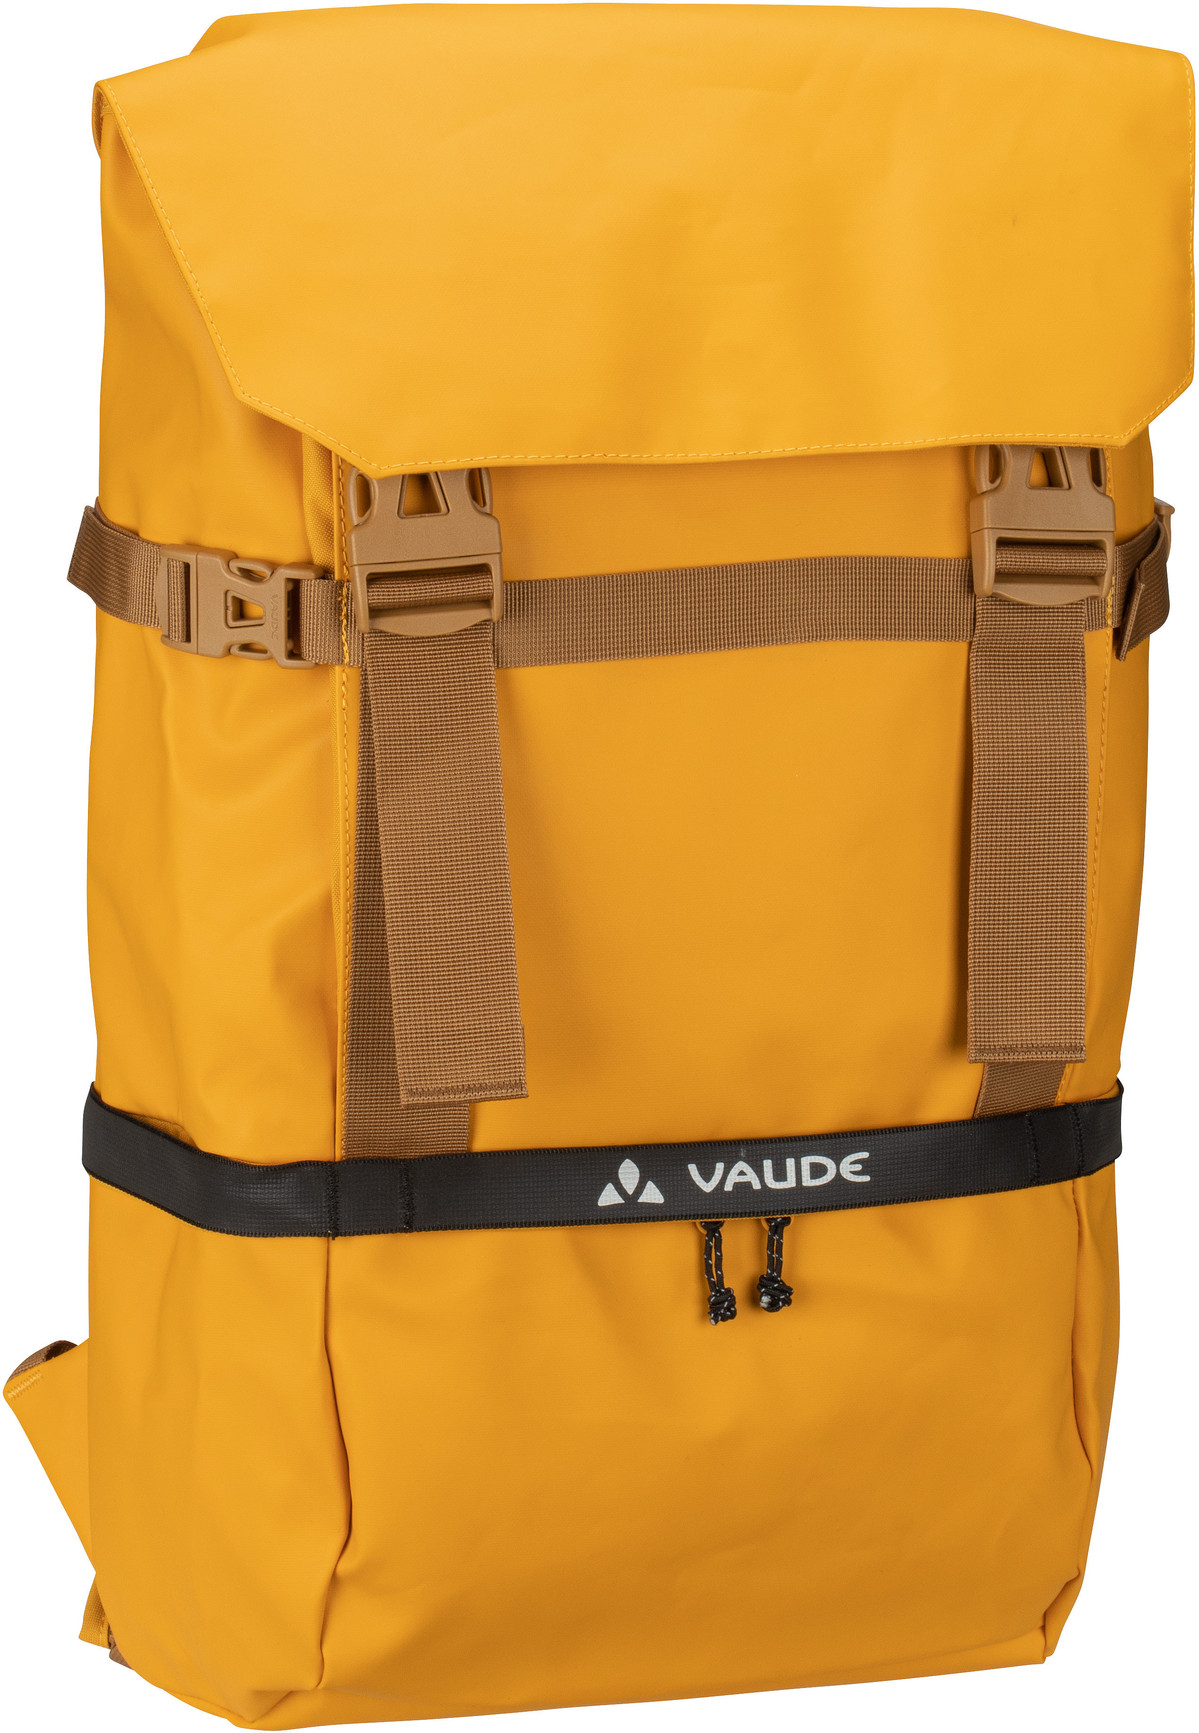 Vaude Mineo Daypack 30  in Gelb (30 Liter), Rolltop Rucksack